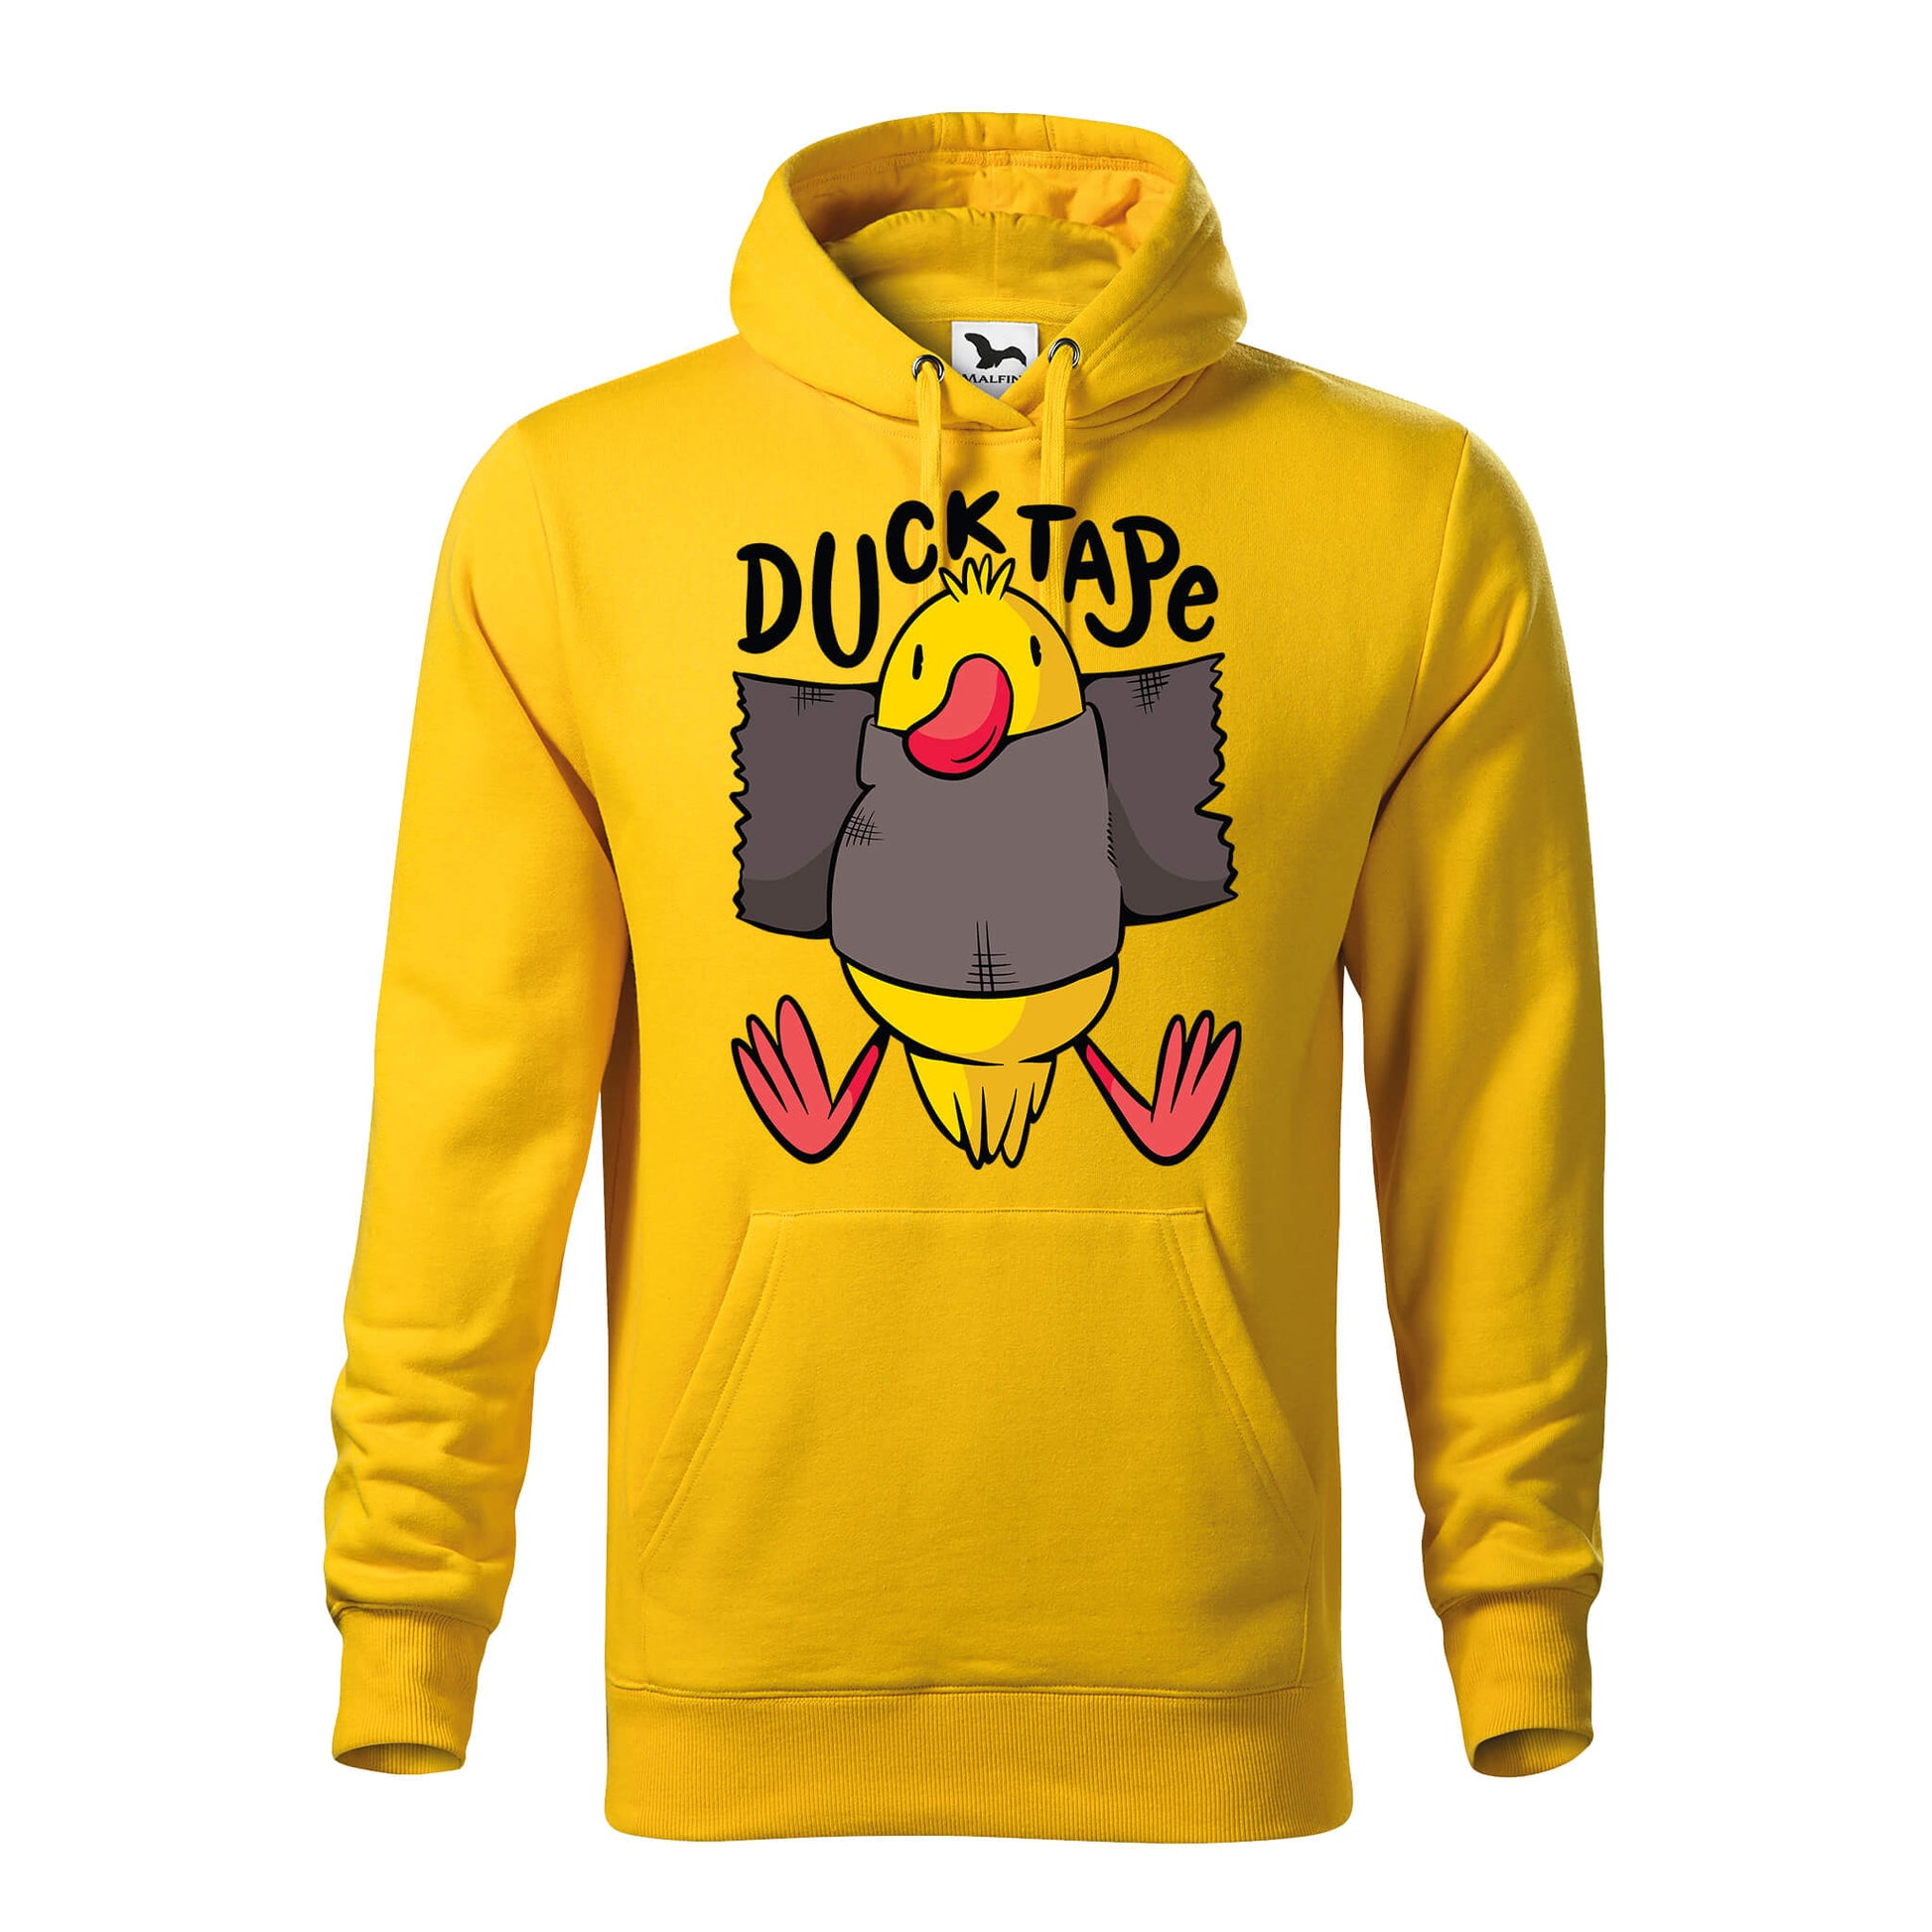 Ducktapetshirt hoodie - rvdesignprint